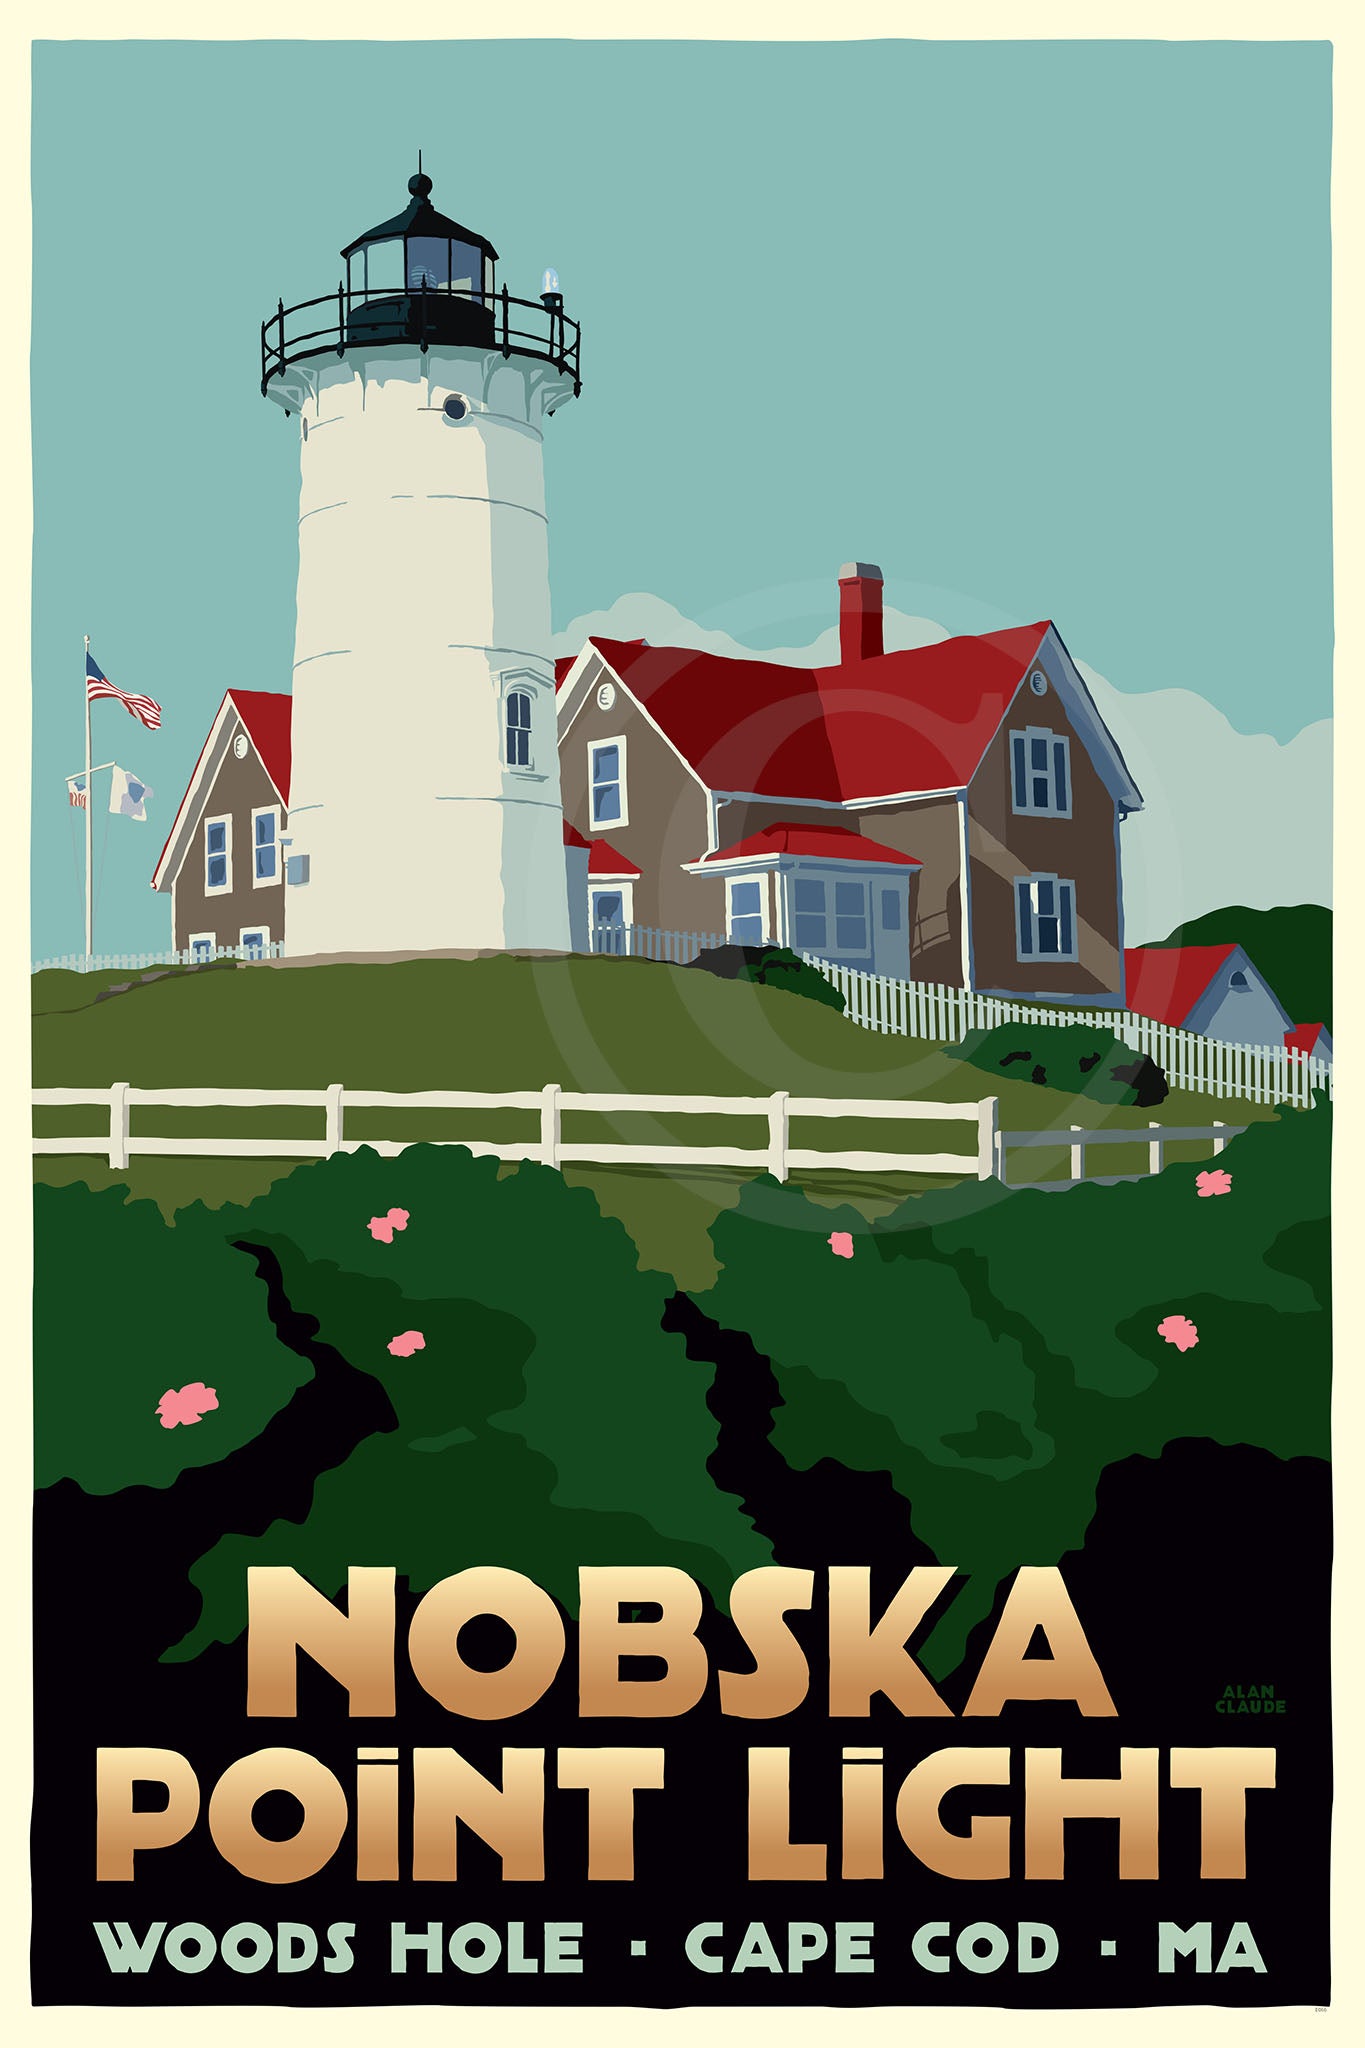 Nobska Point Light Art Print 36" x 53" Travel Poster By Alan Claude - Massachusetts